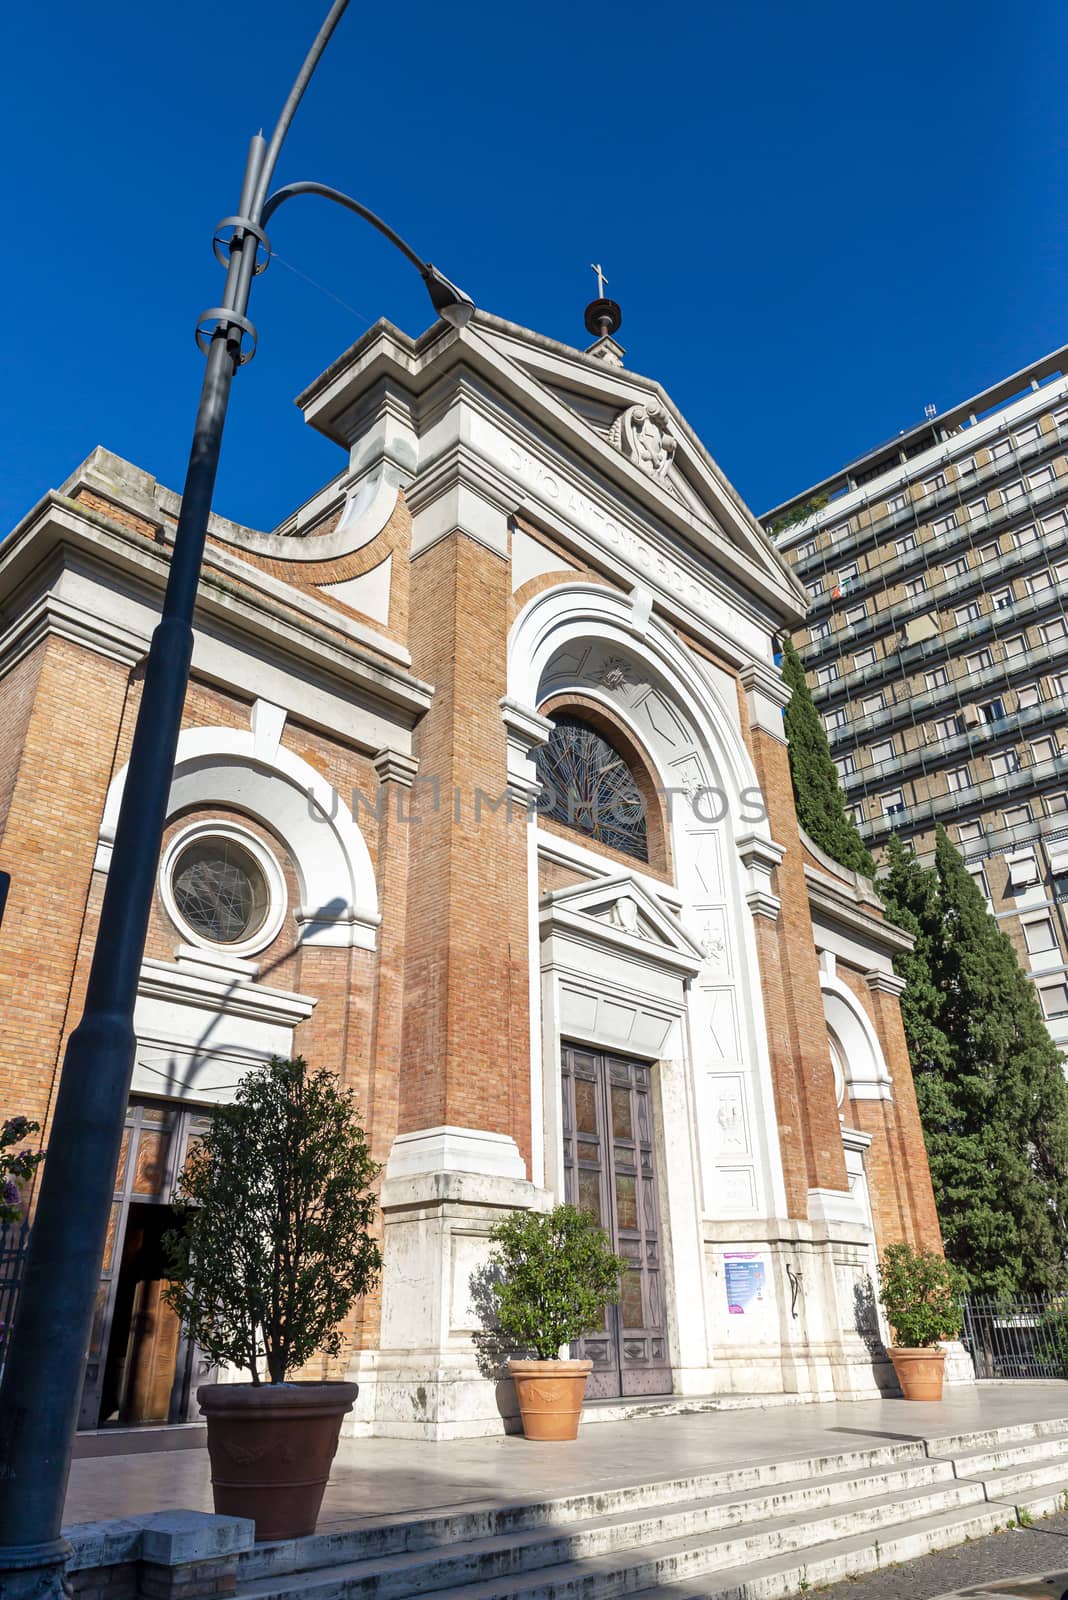 terni,italy august 21 2020:Church of Sant'Antonio in via Curio Dentato in Terni